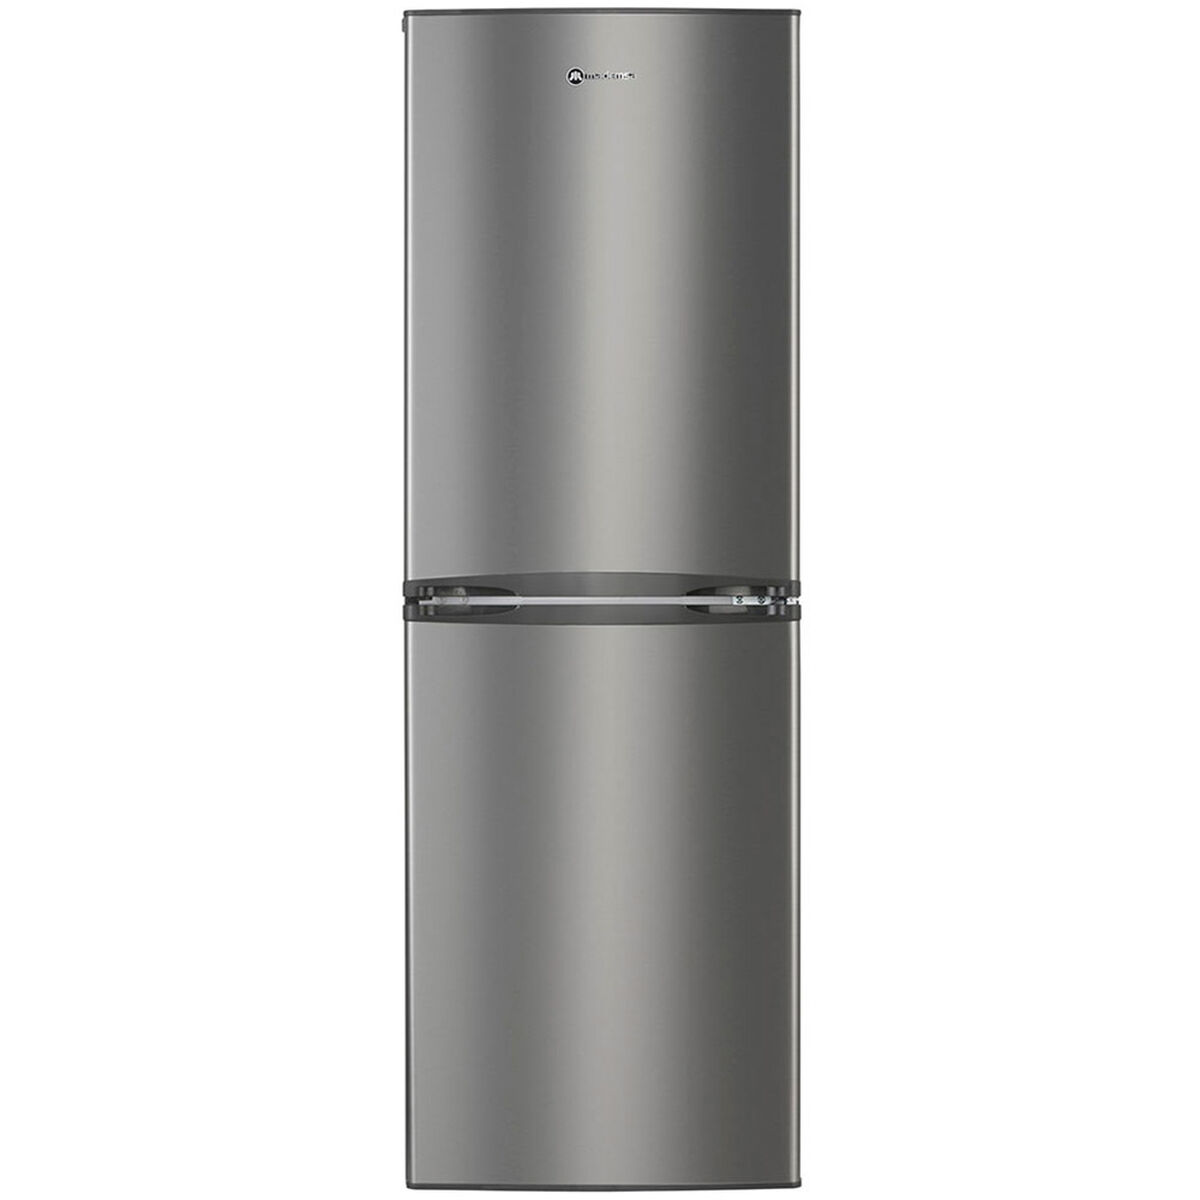 Refrigerador Combi Frio Directo Mademsa Nordik 415 Lapolar Cl